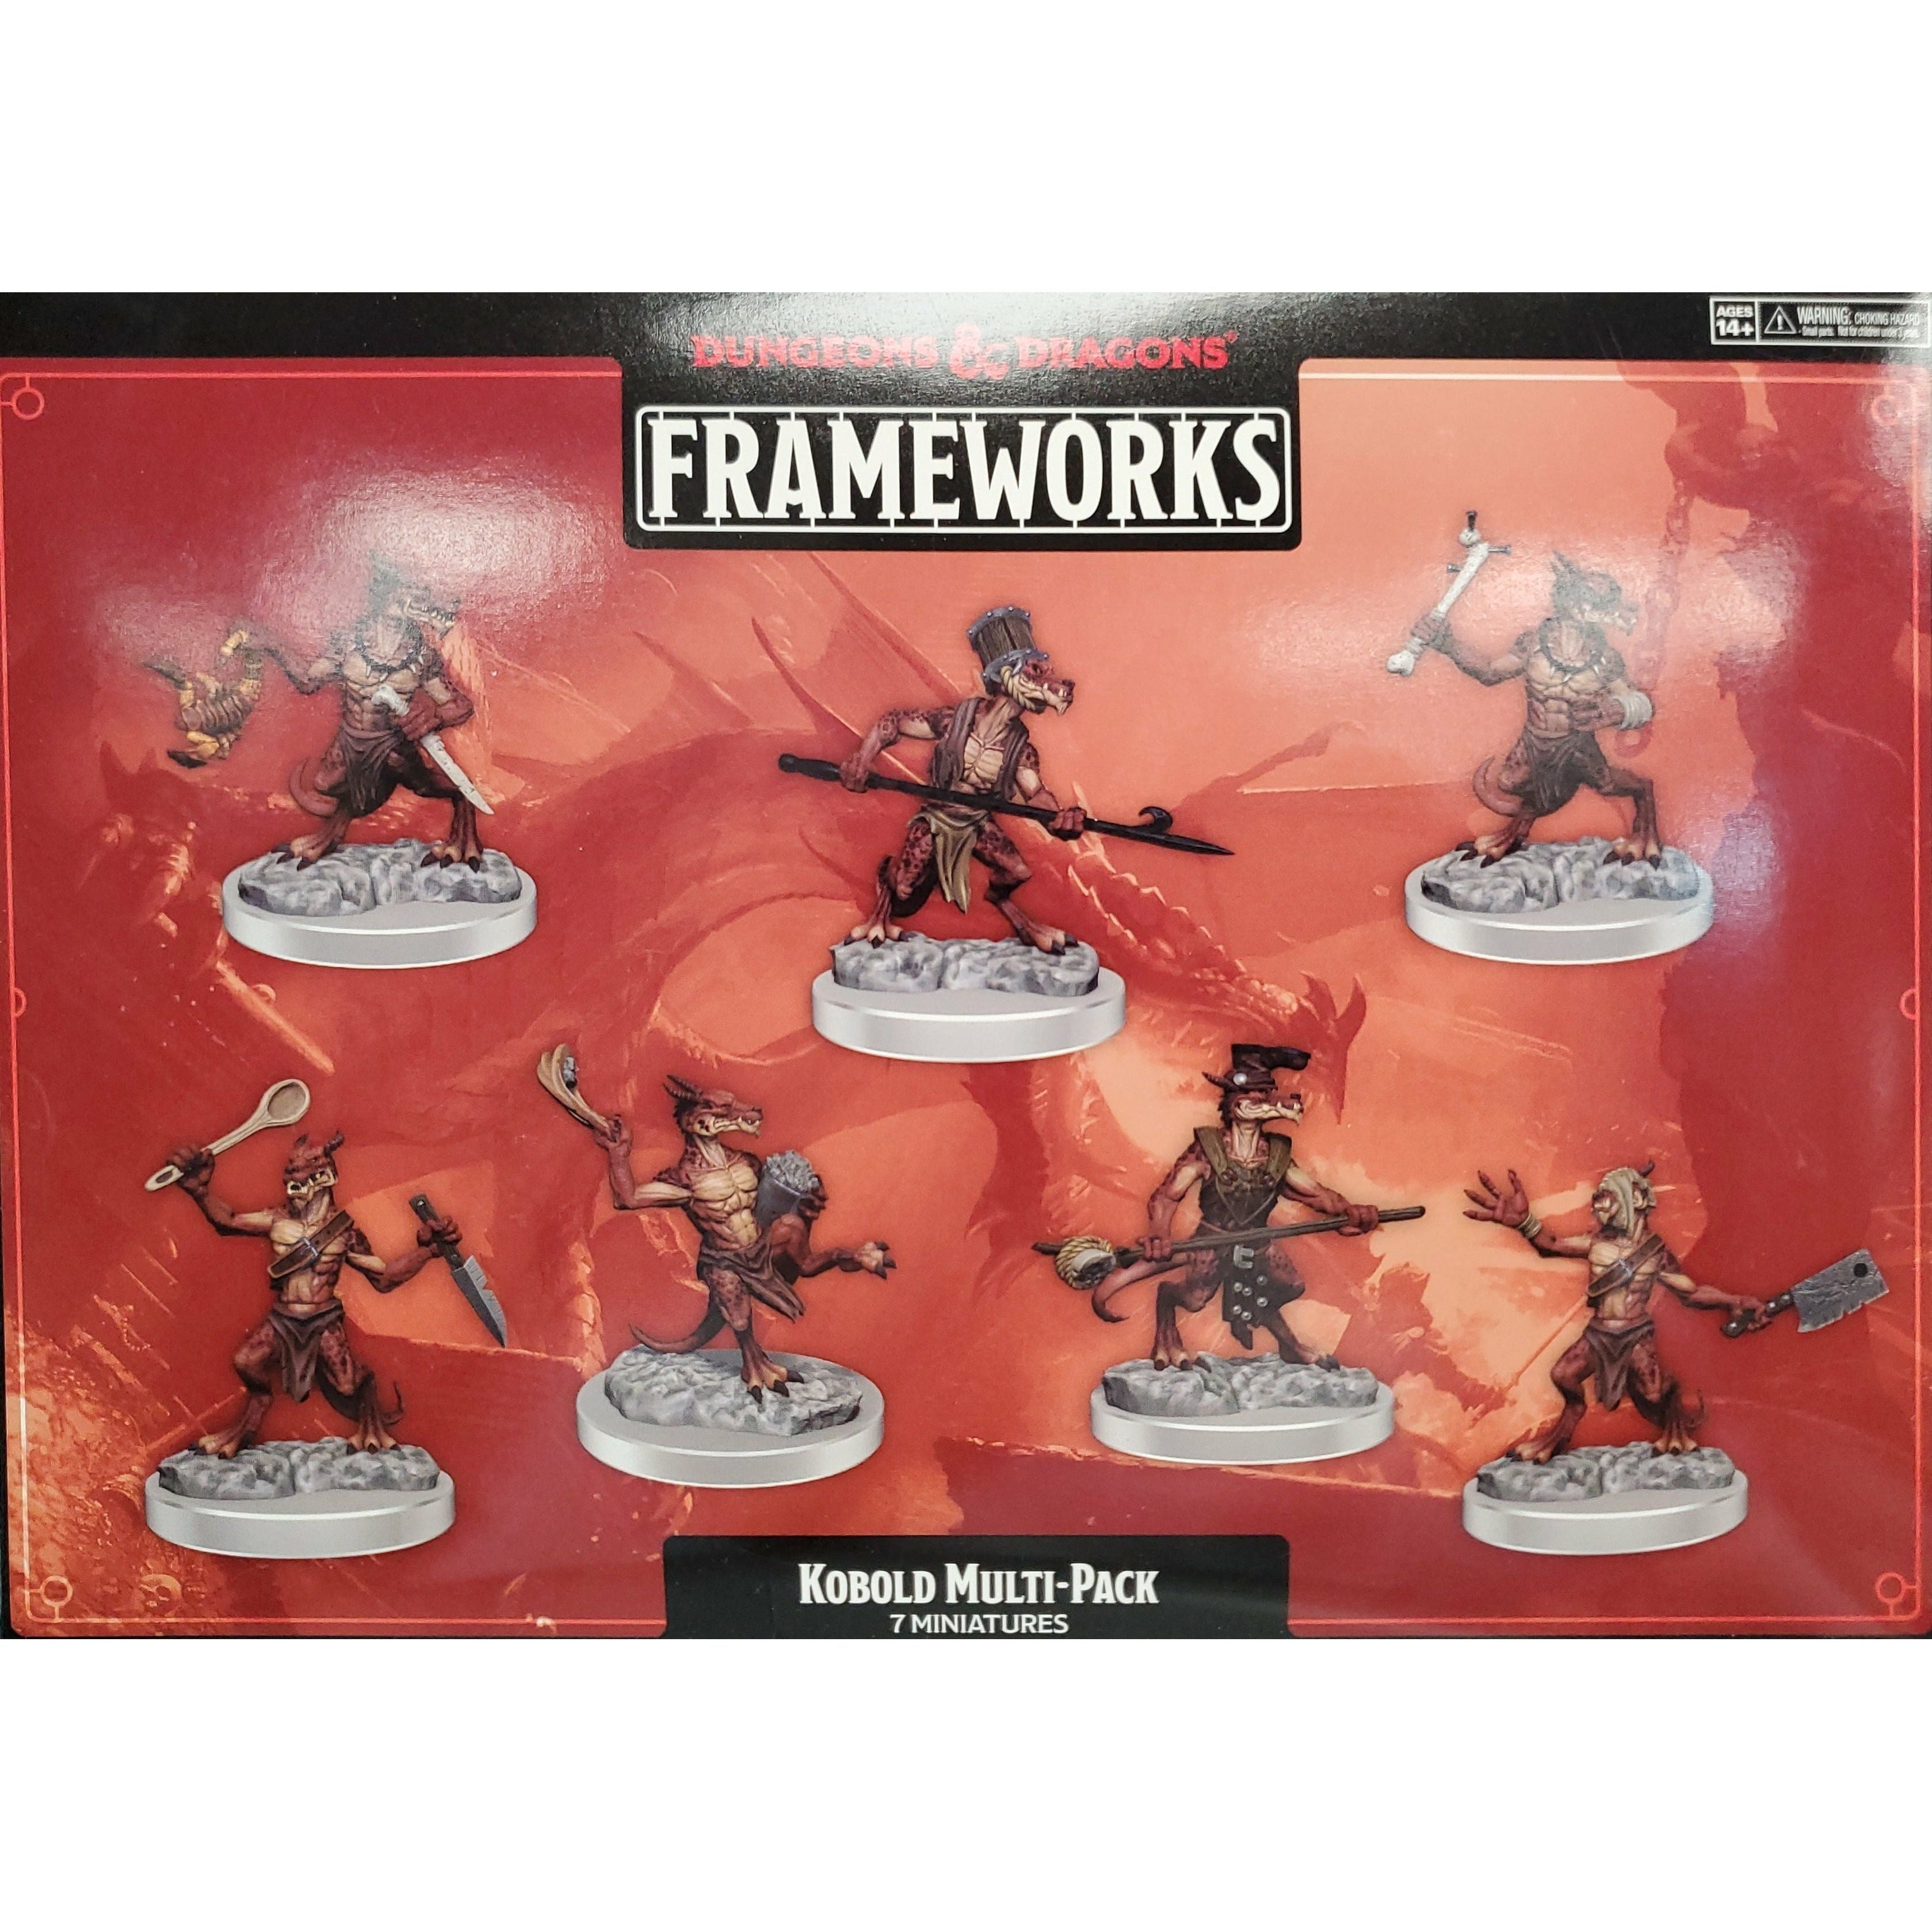 Dungeons & Dragons Frameworks - Kobold Multi-Pack